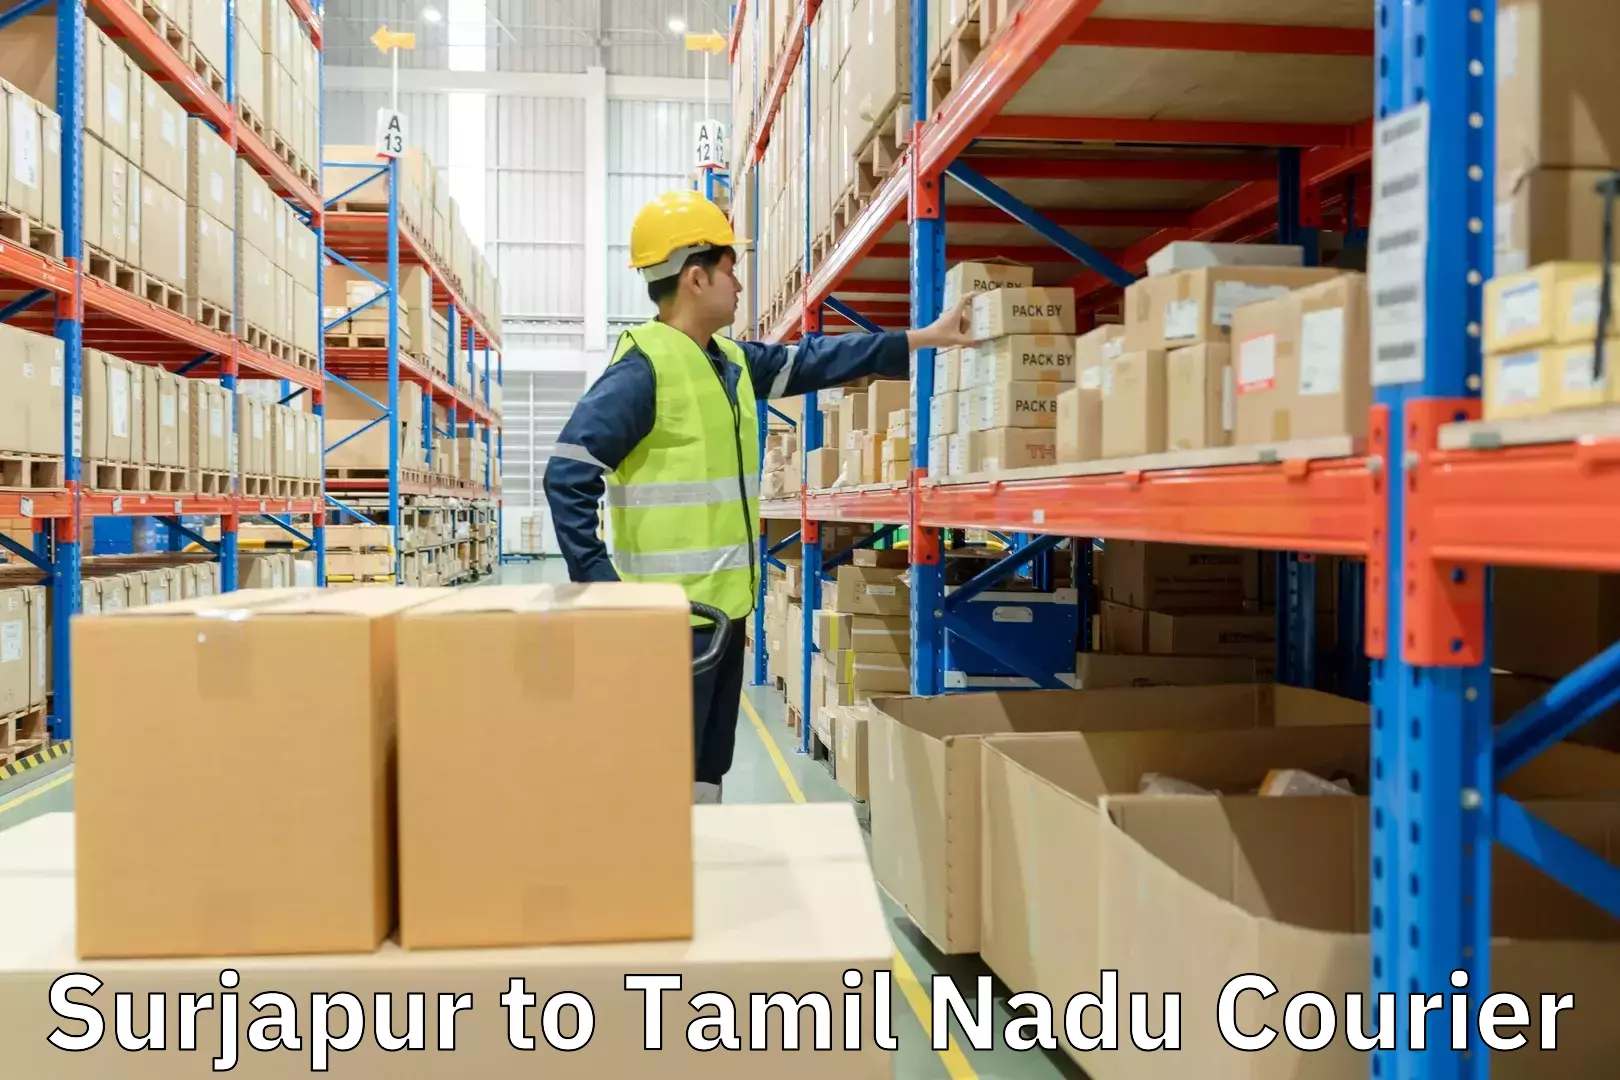 Speedy delivery service Surjapur to Tamil Nadu